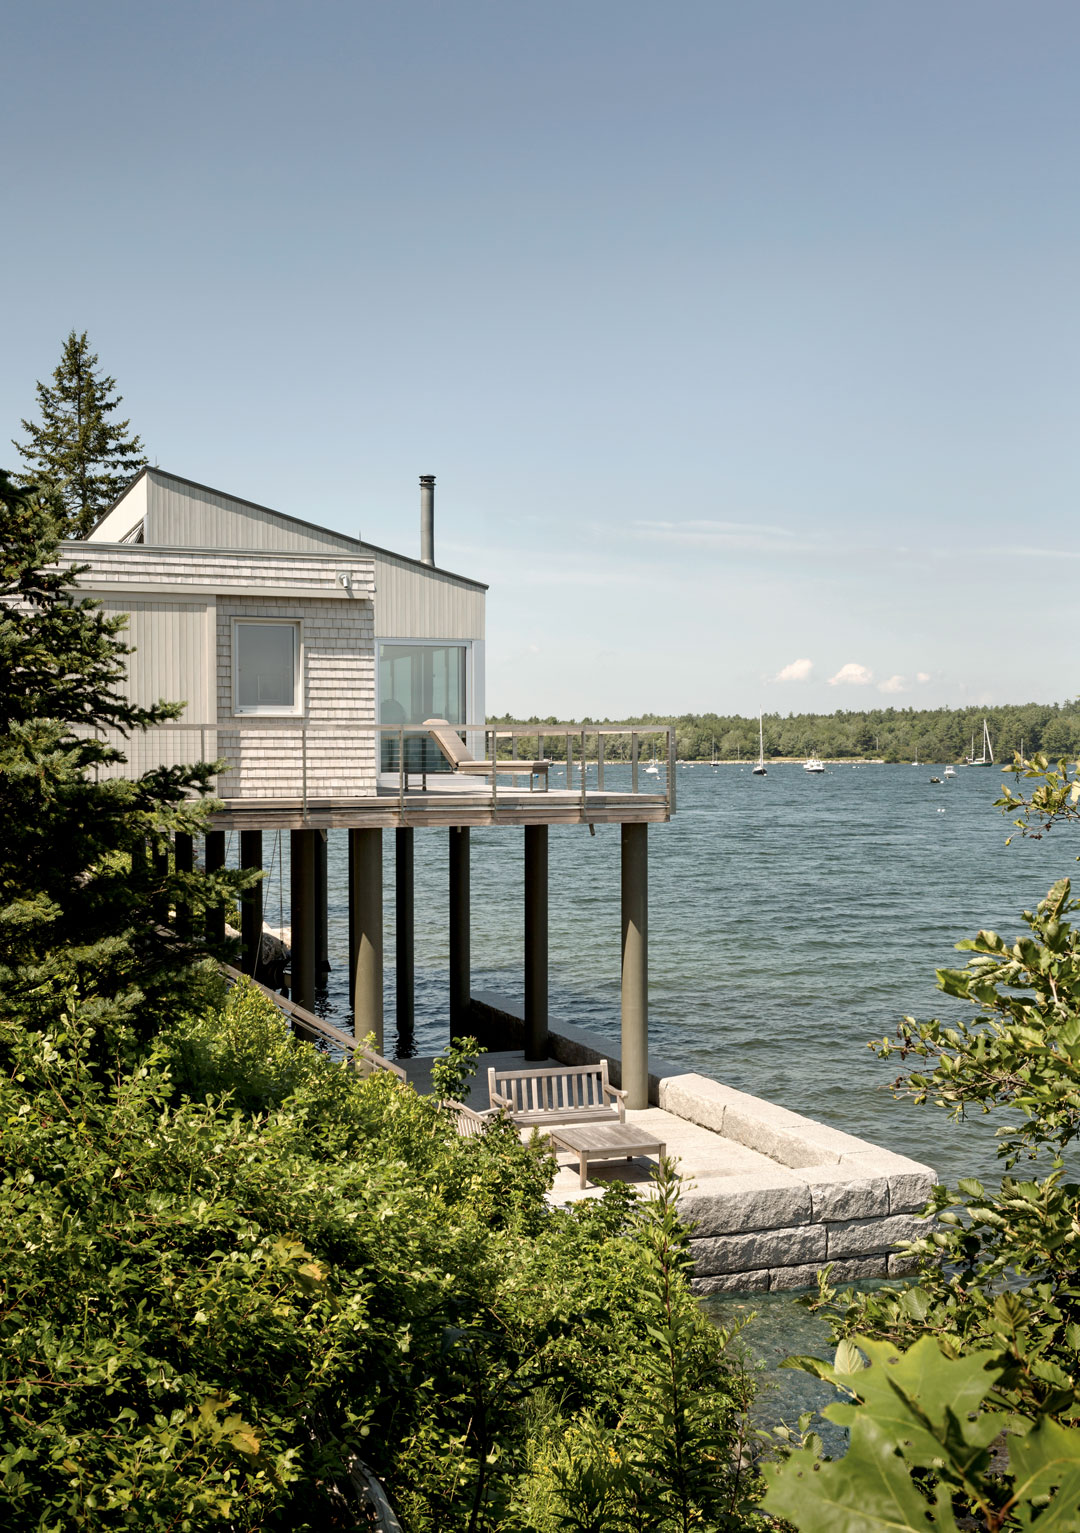 House Over the Sea, Elliott + Elliott Architecture, 2014. Surry, ME, USA. Picture credit: photograph © Trent Bel